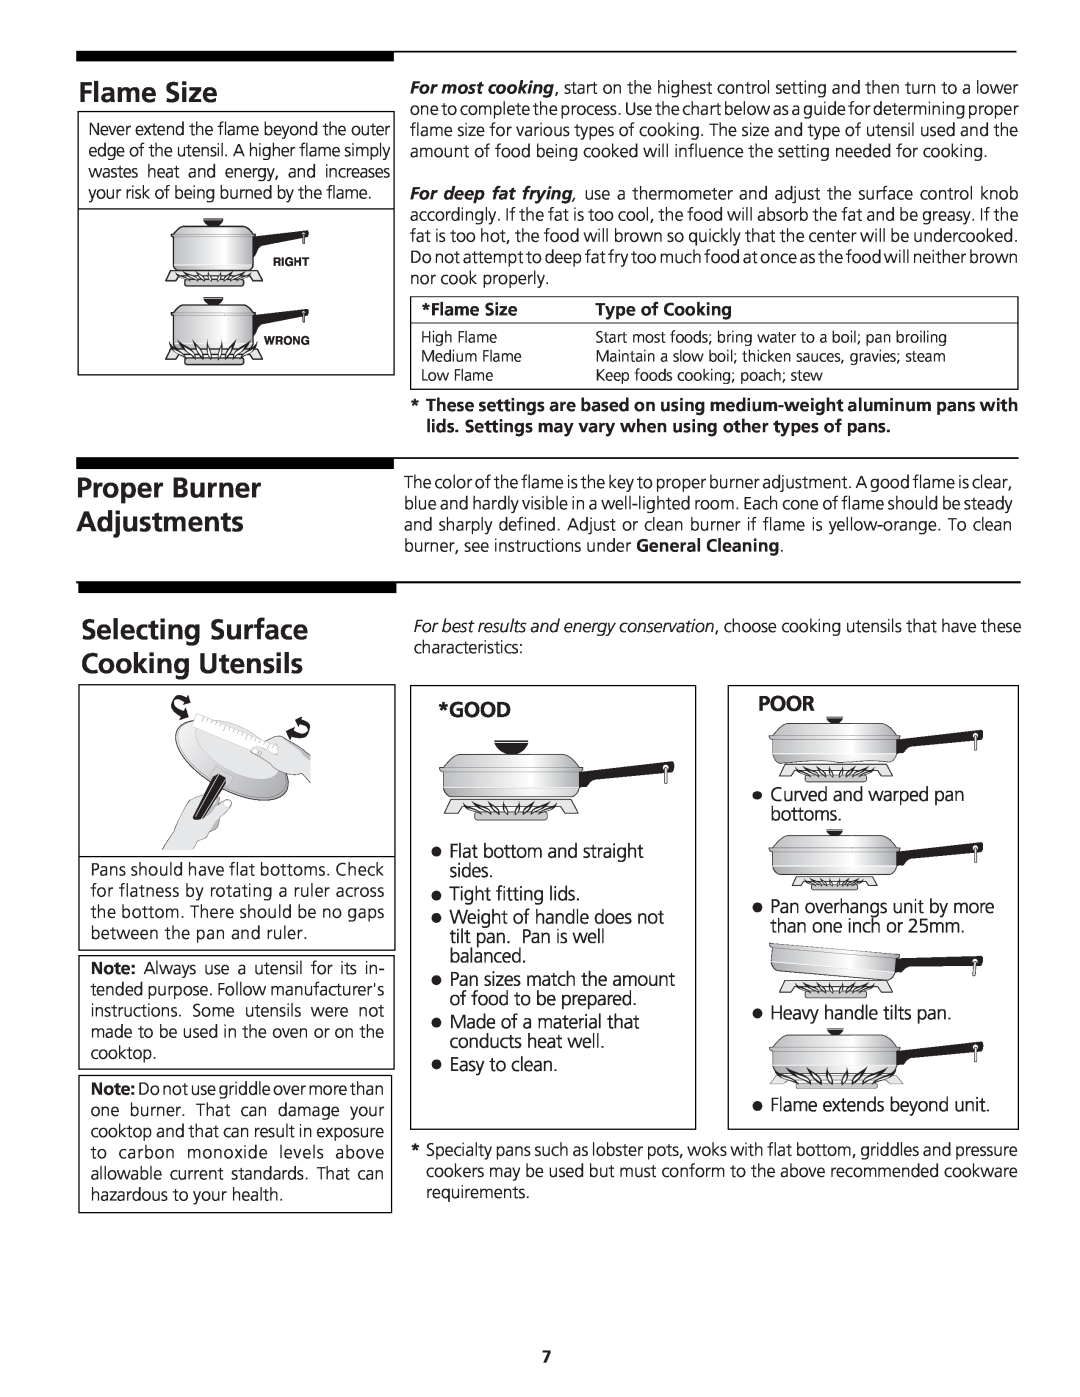 Tappan 318200764 manual Flame Size, Proper Burner Adjustments, Selecting Surface Cooking Utensils, Type of Cooking 